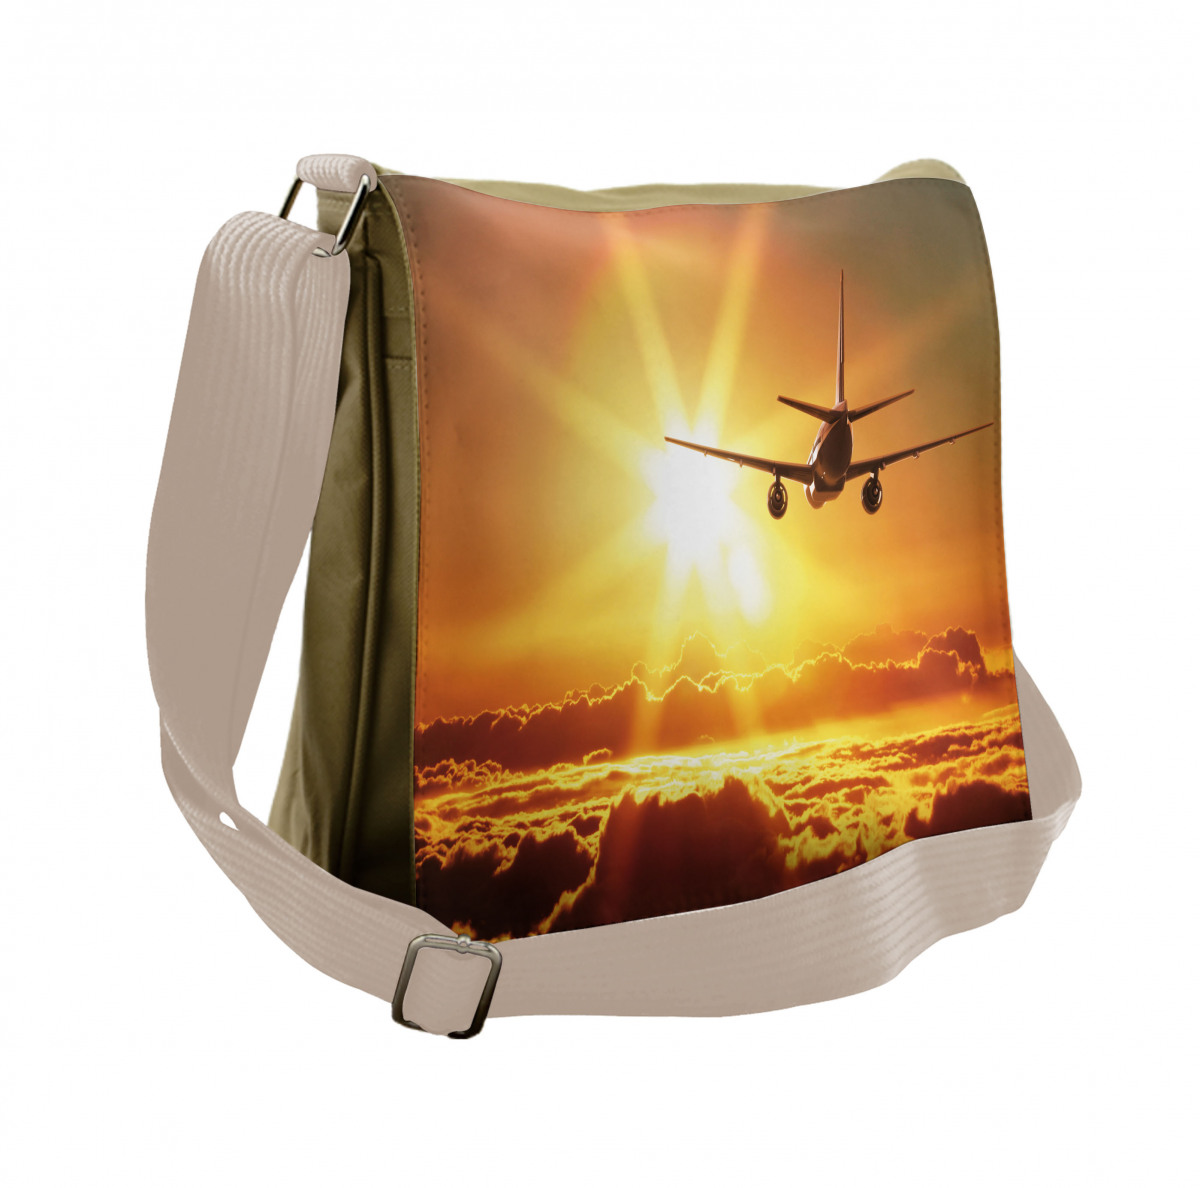 Widebody Jet Air Plane Messenger Bag